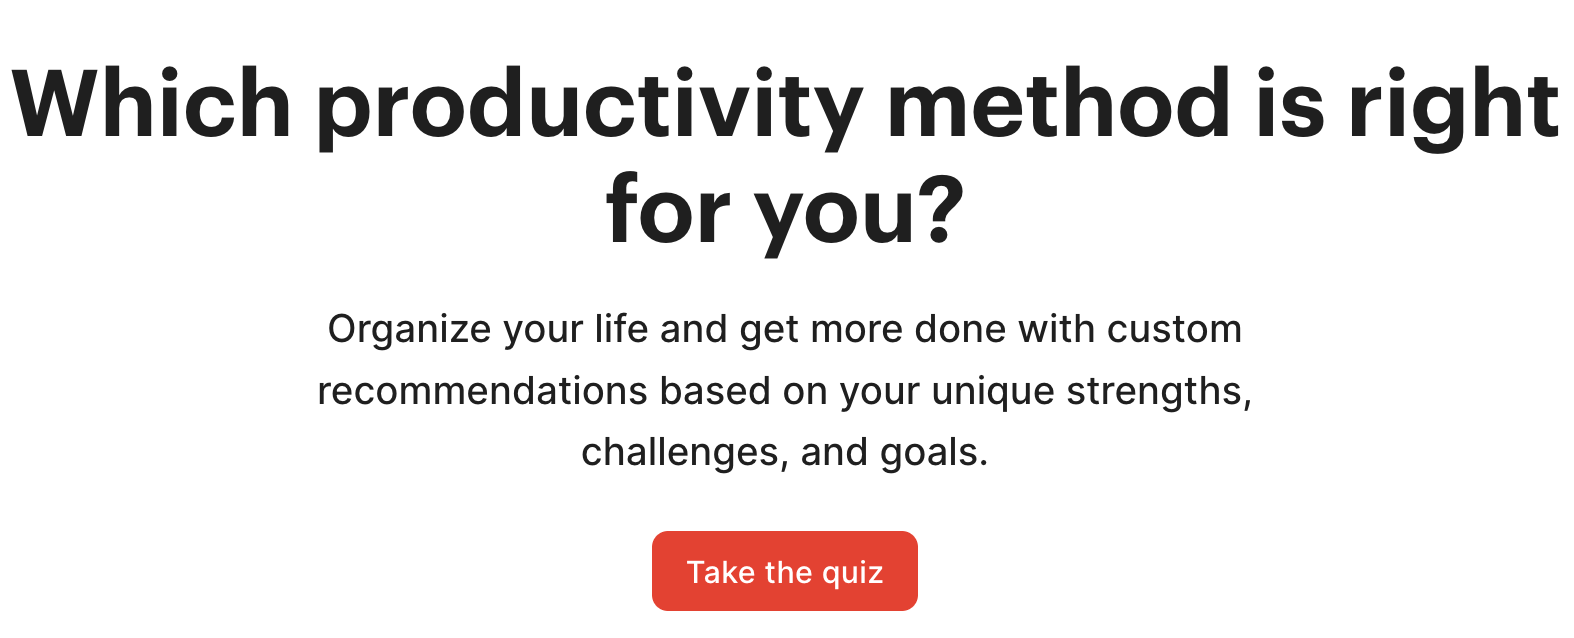 Todoist's productivity methods quiz